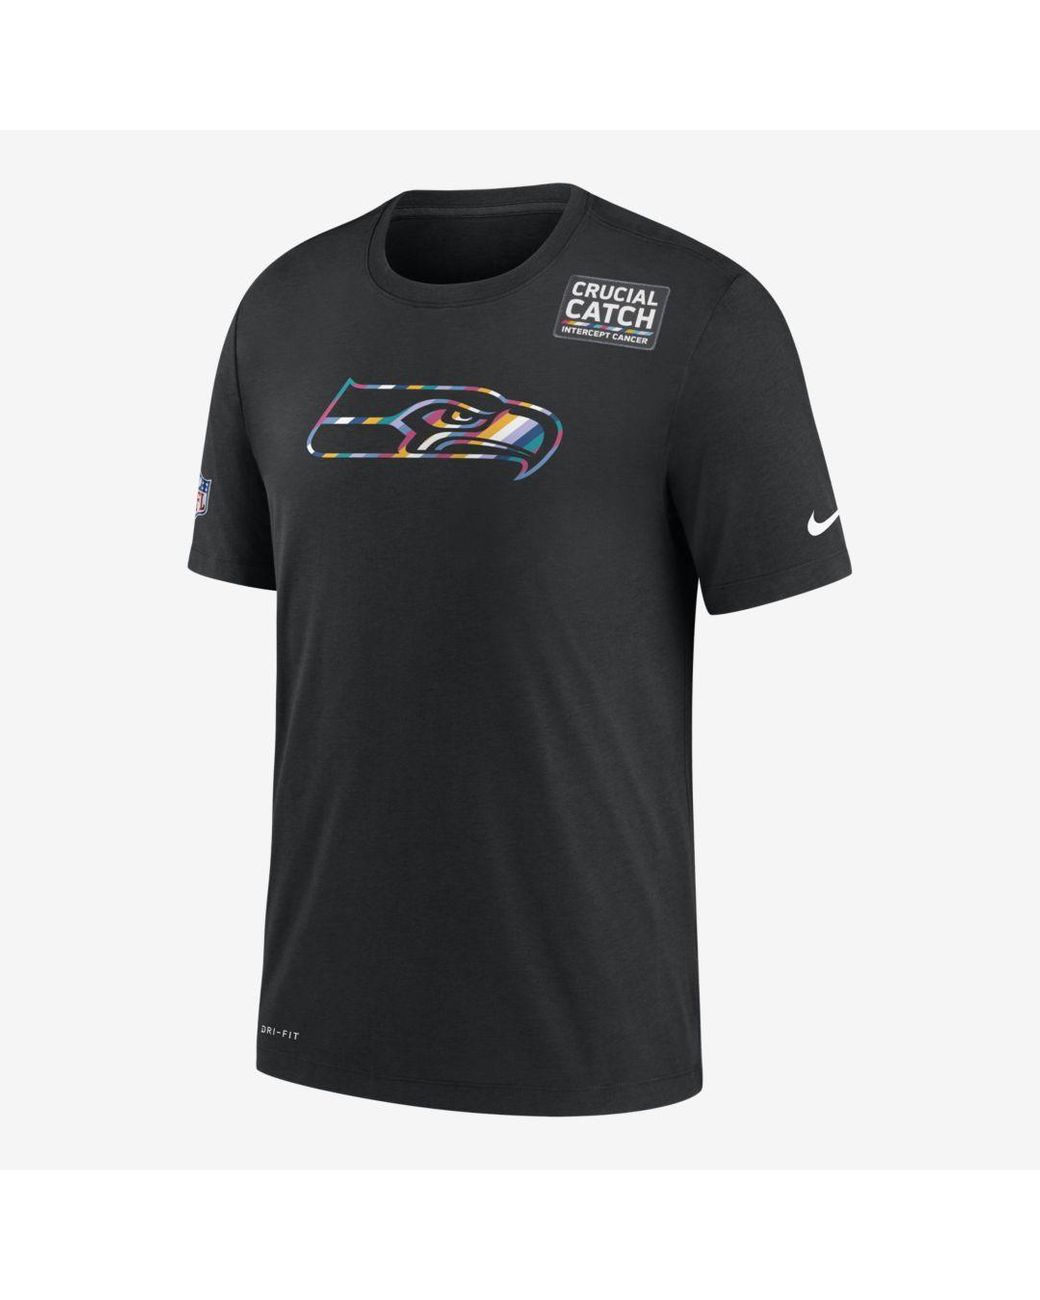 Nike Crucial Catch (nfl Seahawks) T-shirt (black) for Men - Lyst